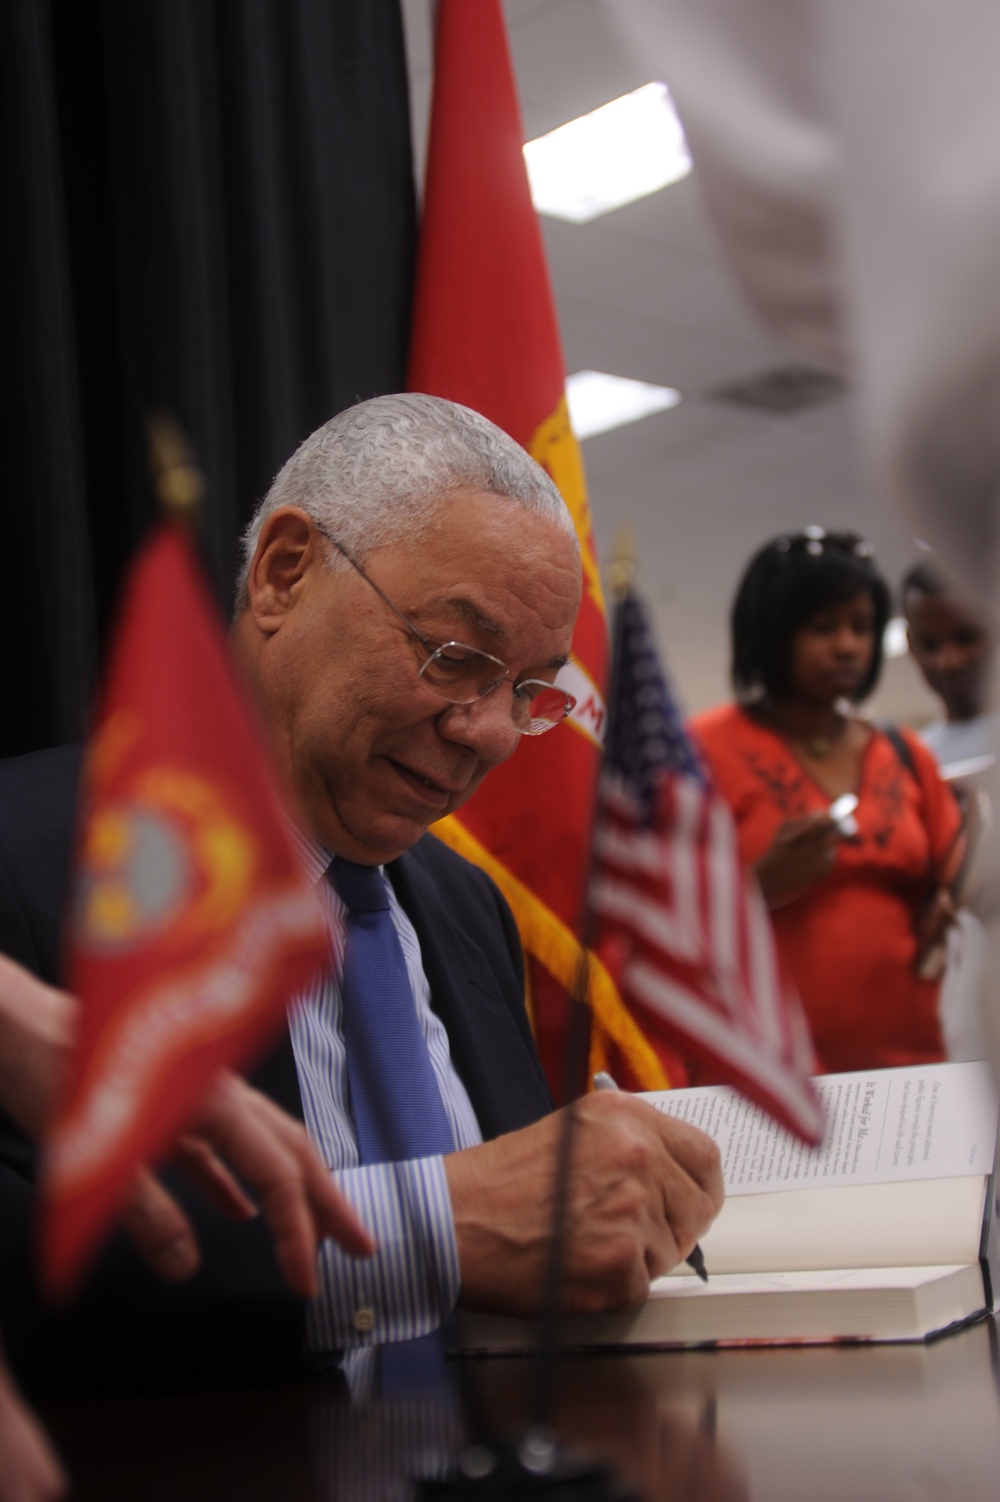 Colin Powell visits Marine Corps Base Quantico